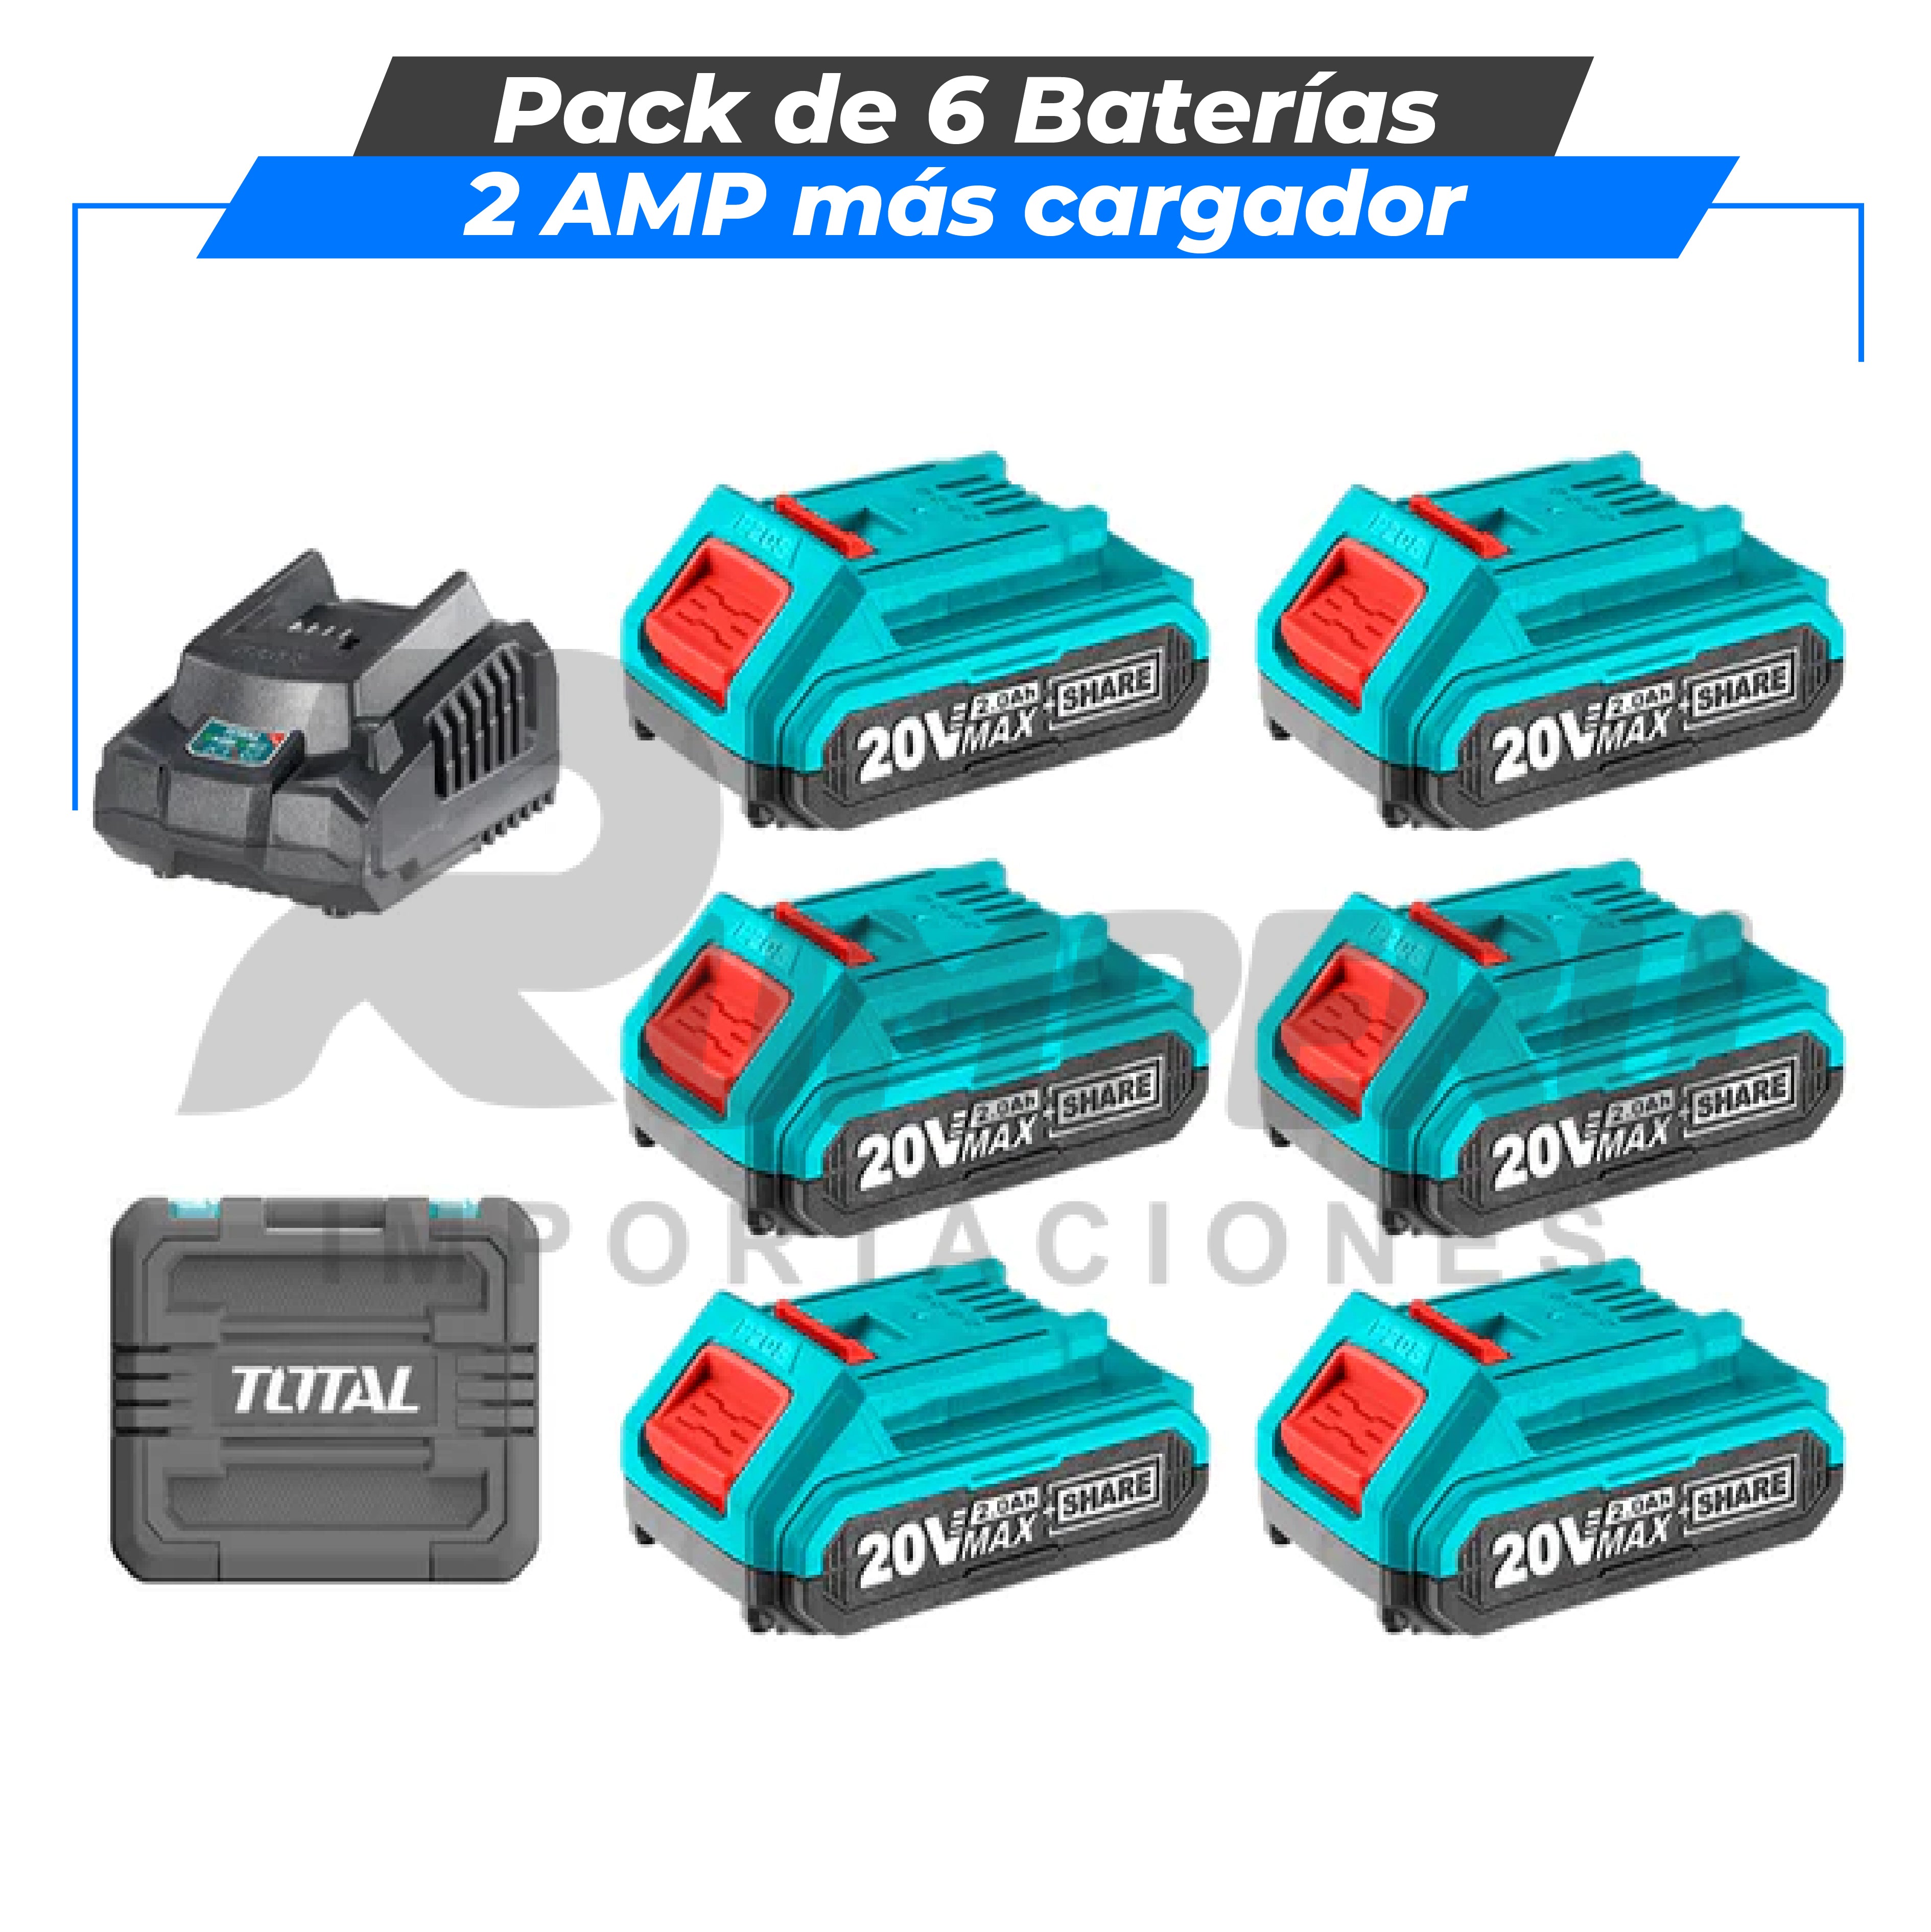 Pack de 6 Baterías 2Amp más cargador